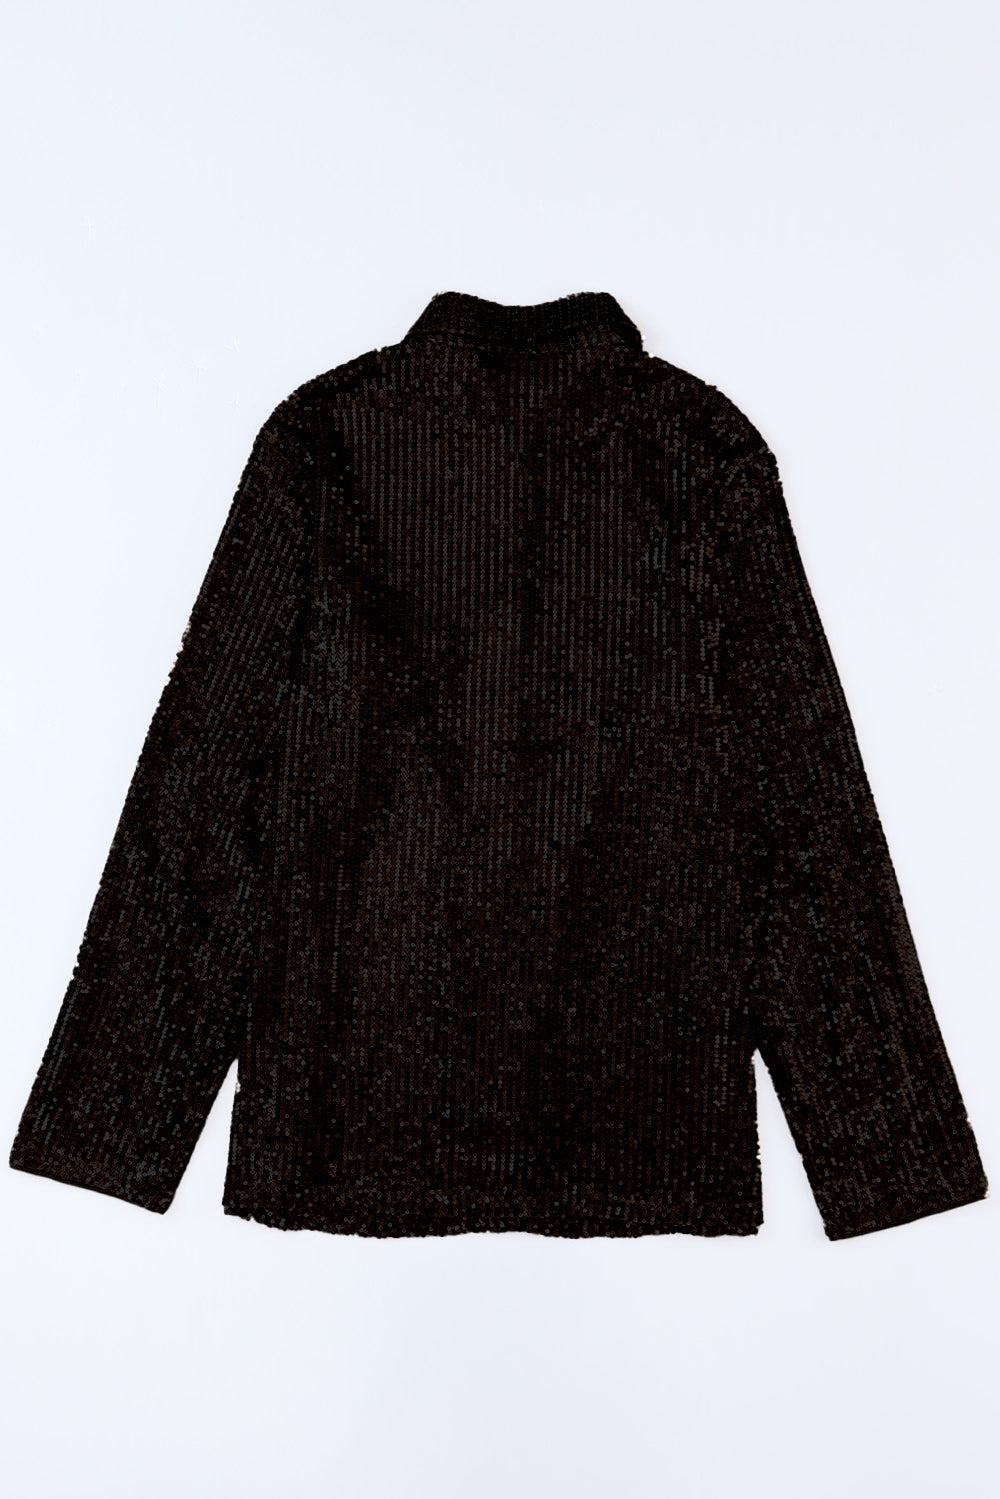 Sequin Button Up Long Sleeve Shirt - Black